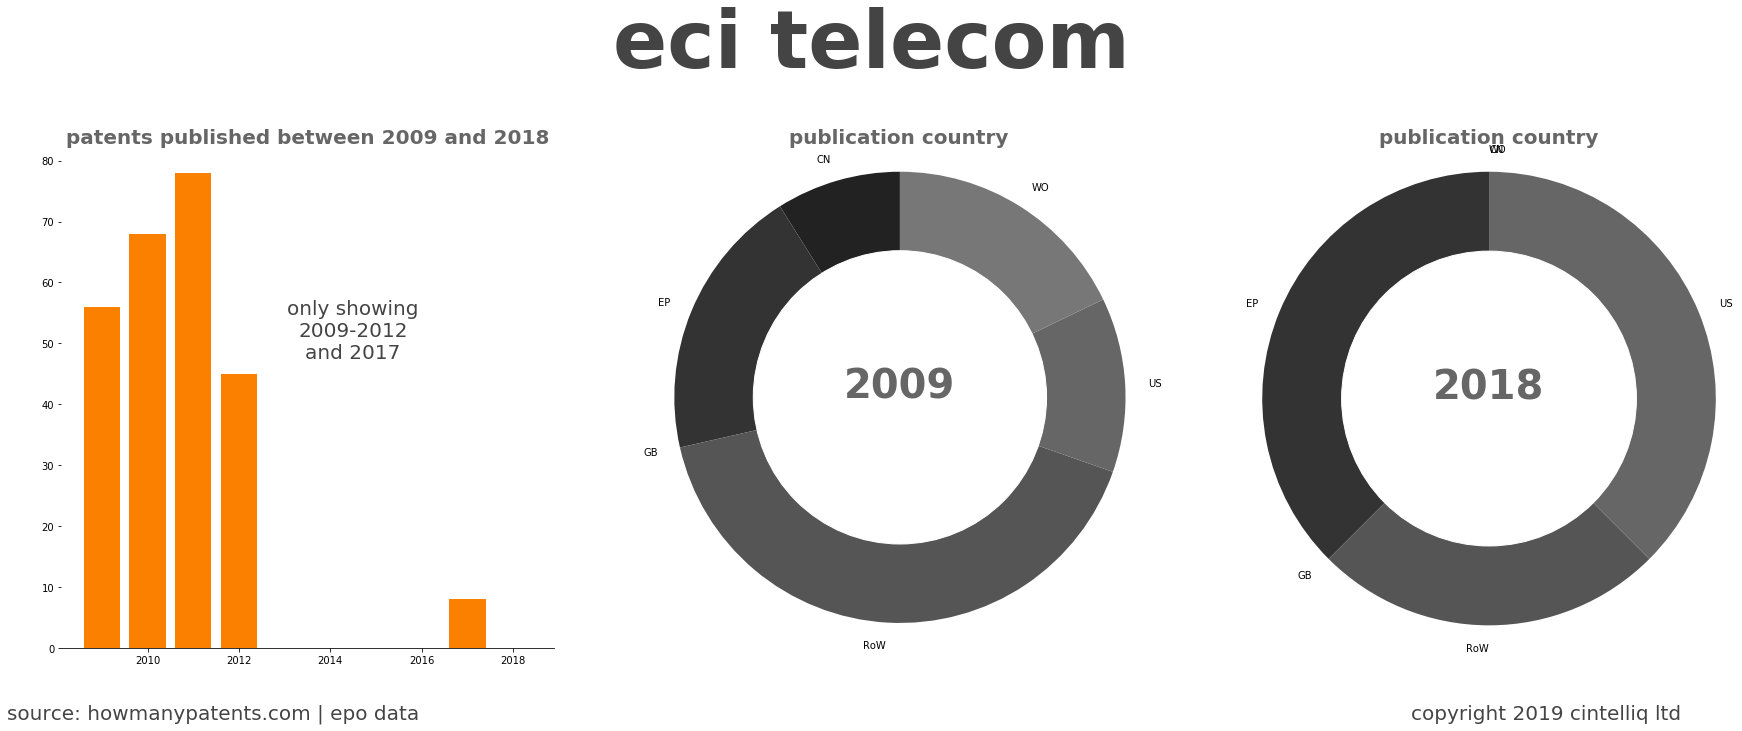 summary of patents for Eci Telecom